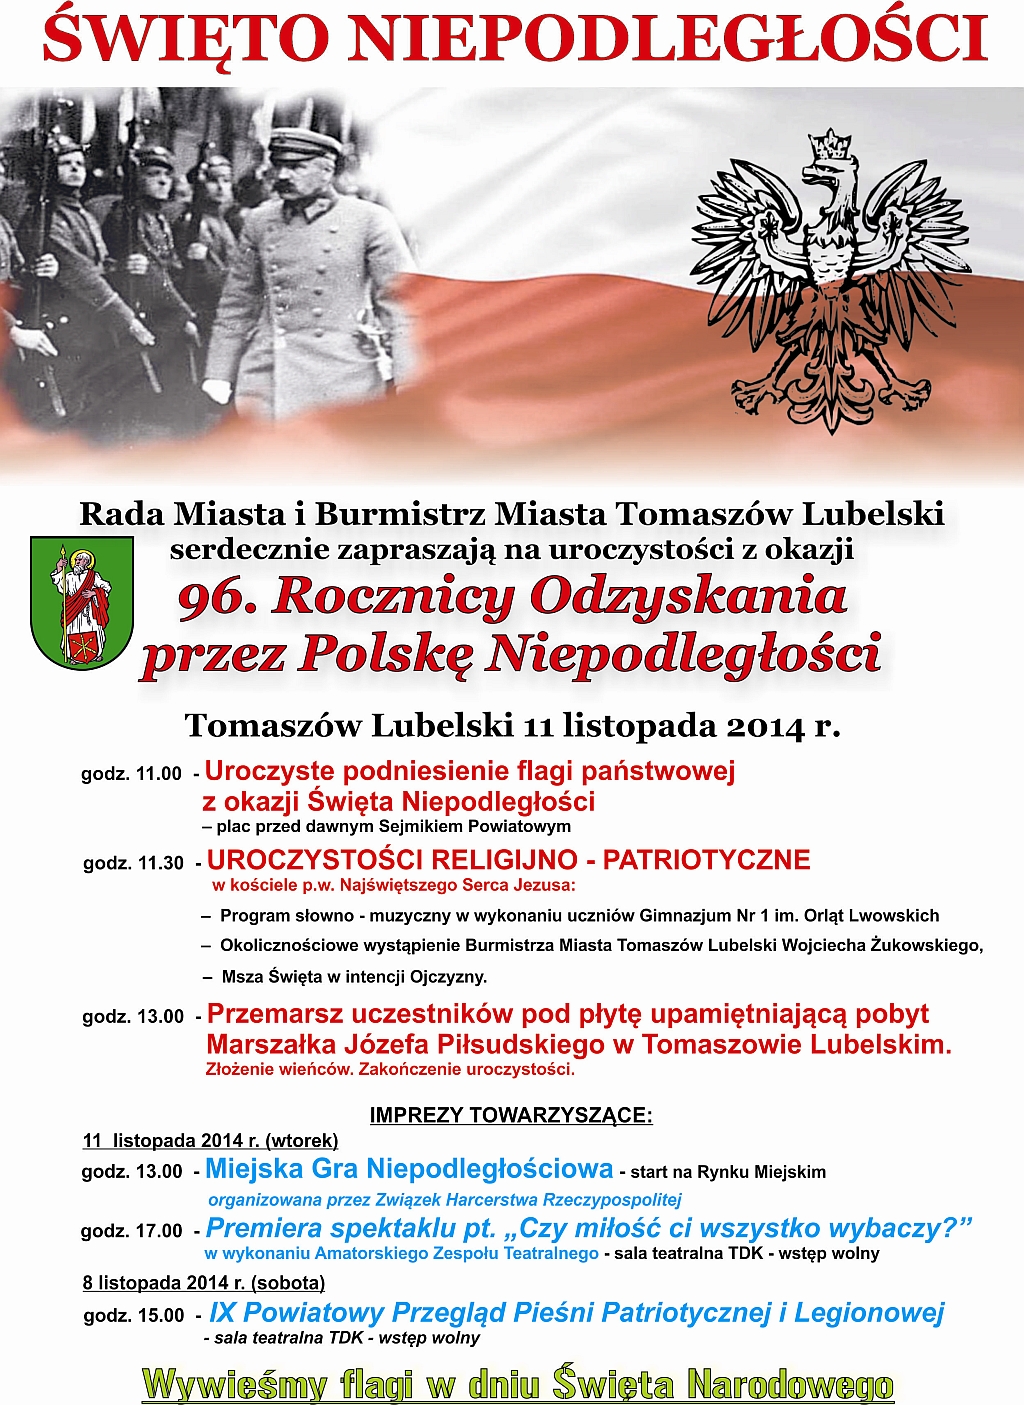 https://www.tomaszow-lubelski.pl/upload/images/201411/11_listopada.jpg